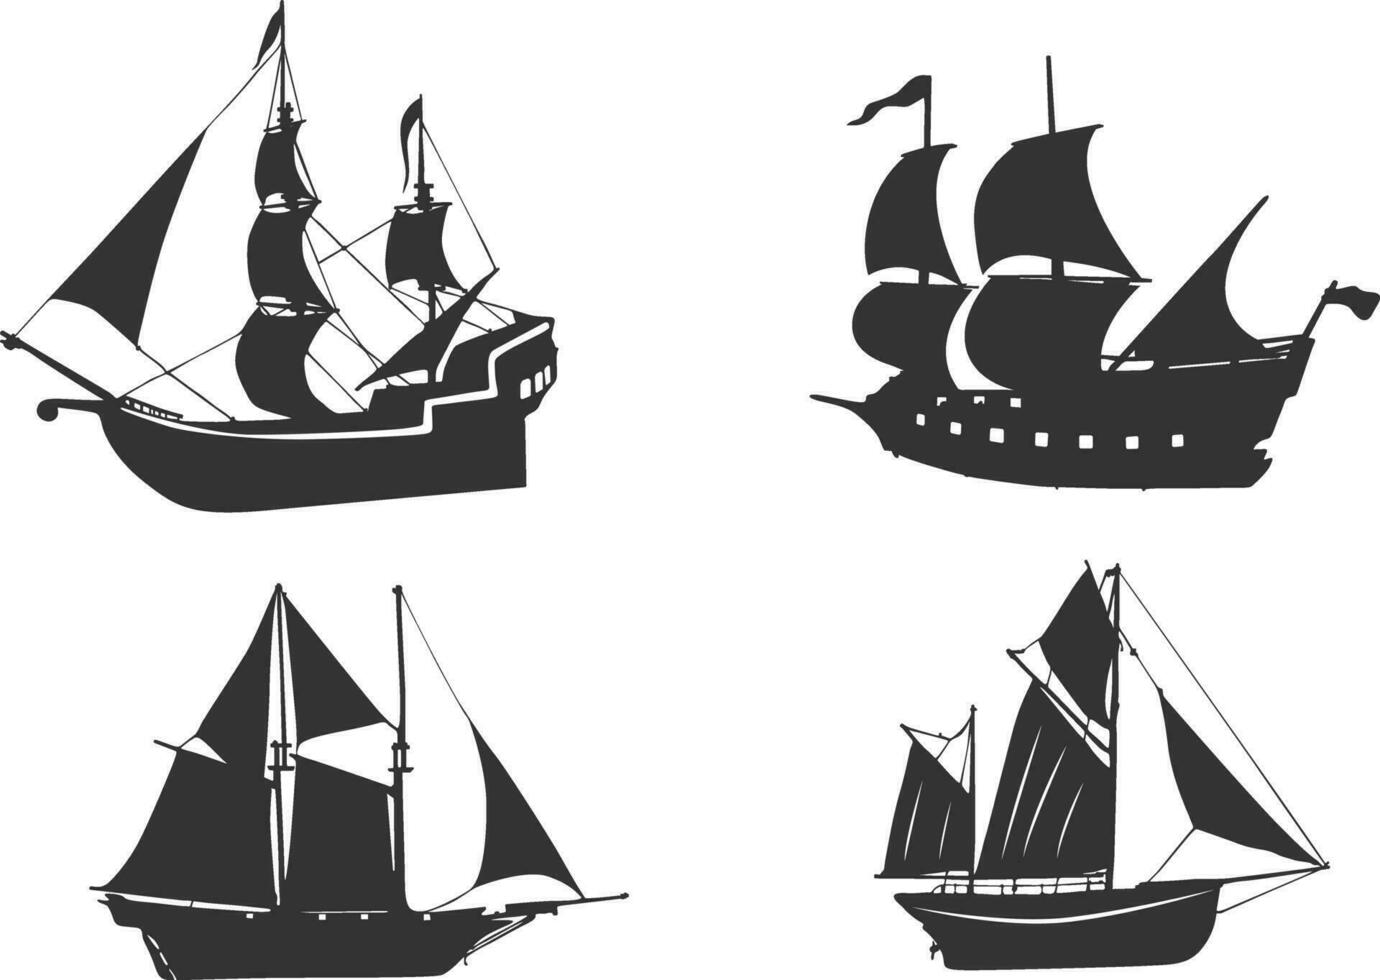 alt Schiff Silhouette, Pirat Schiff Vektor, Schiff Silhouette, Segeln Schiff Silhouette, alt Schiff Vektor